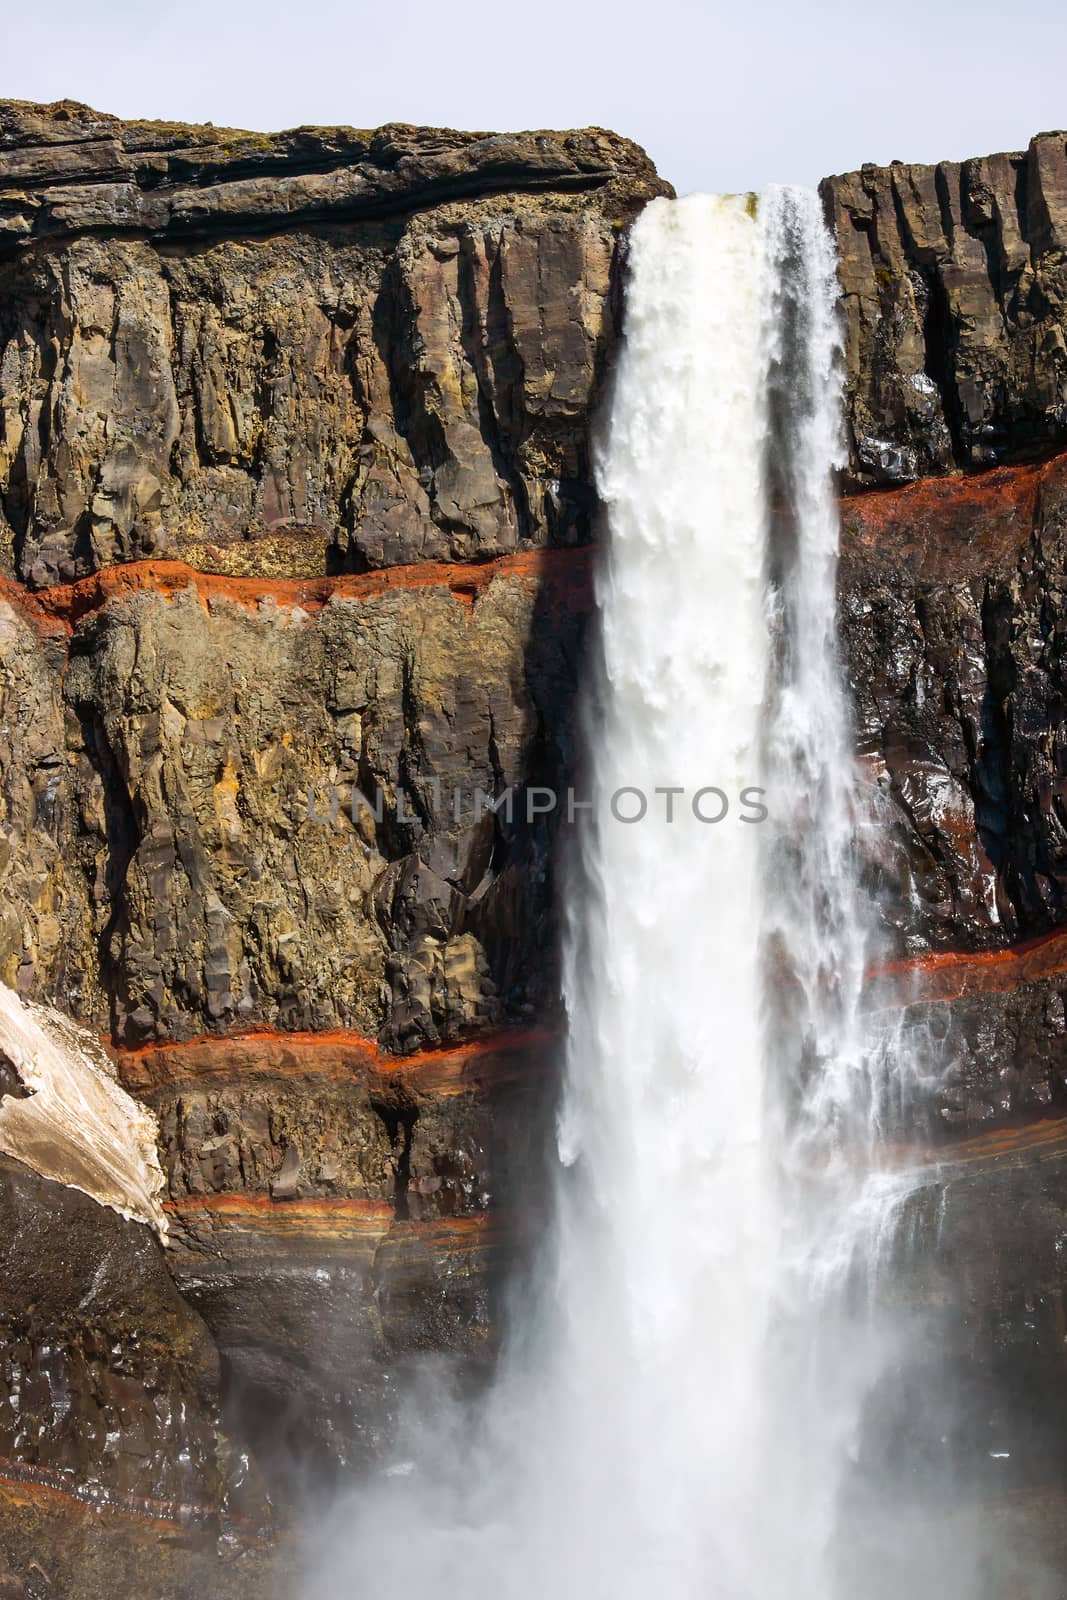 The Hengifoss waterfall in Iceland by elxeneize